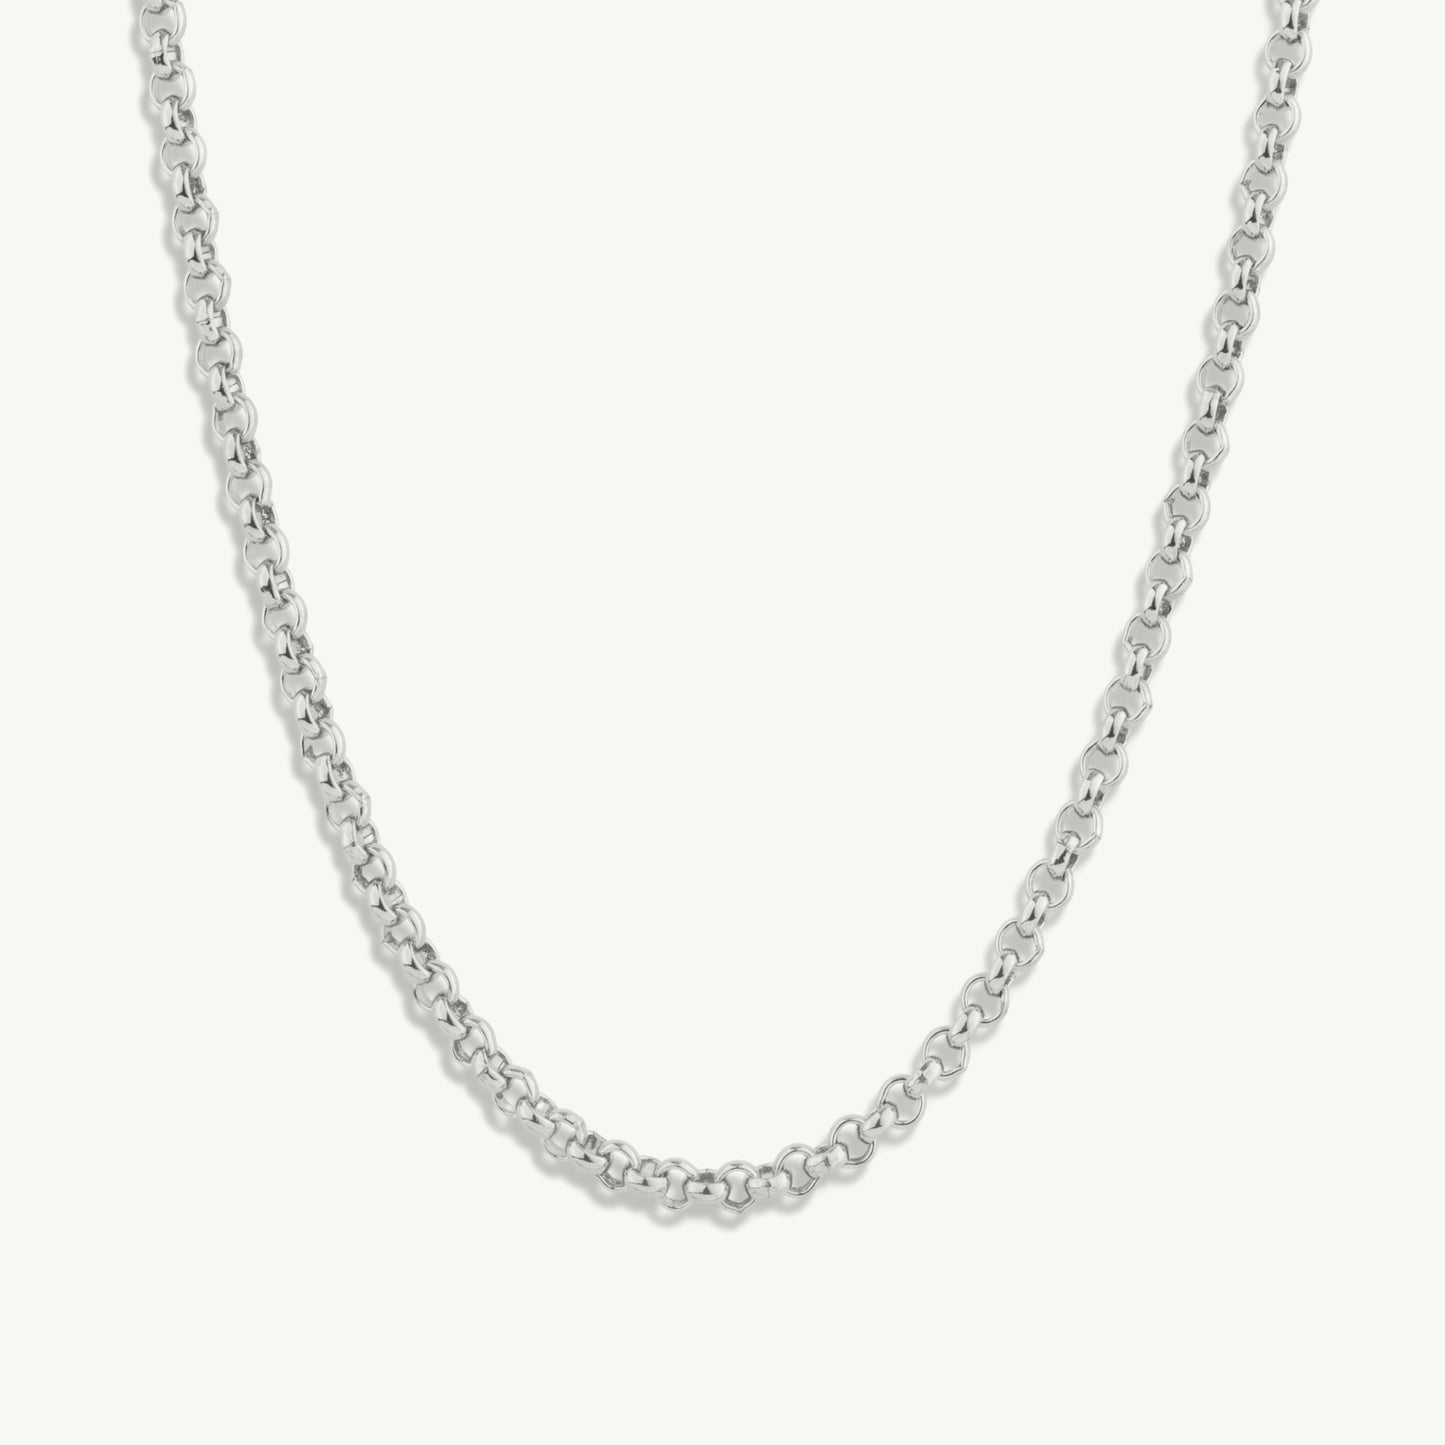 Orianne necklace